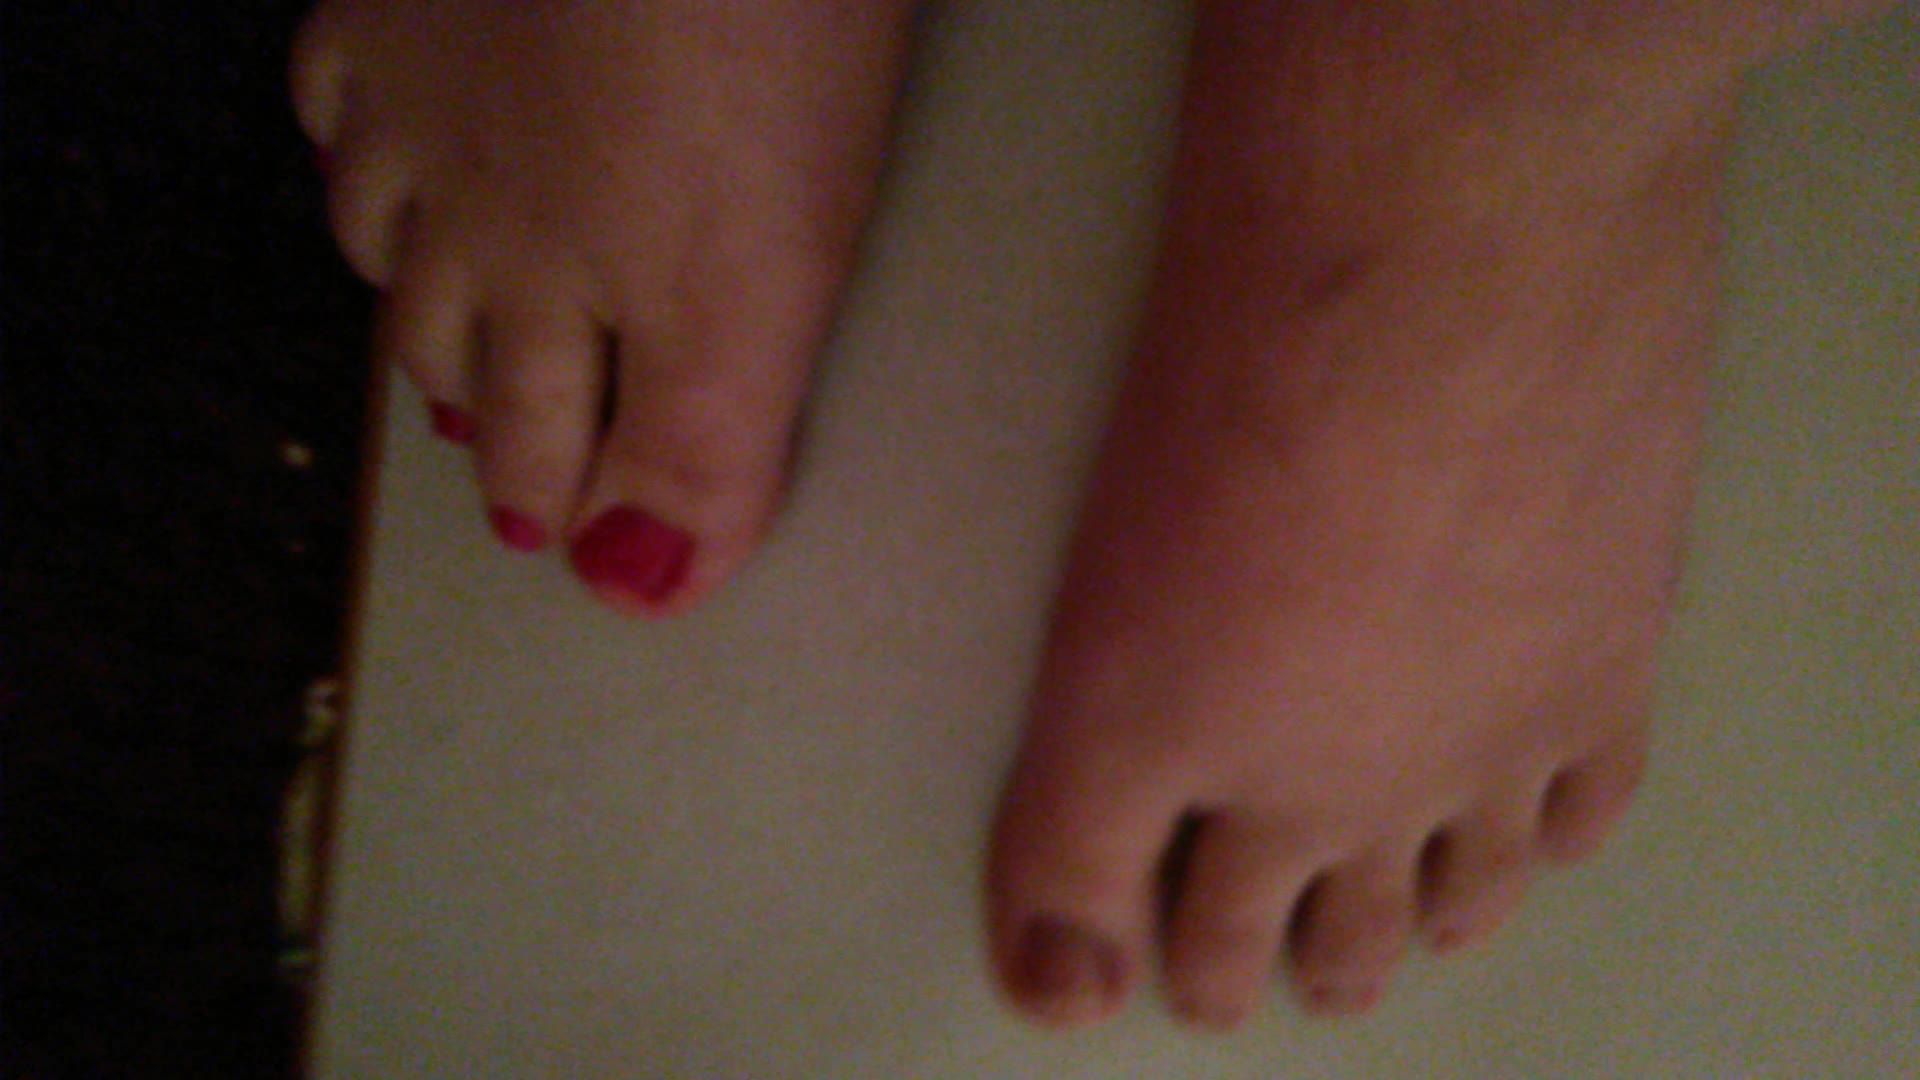 painting my toenails!